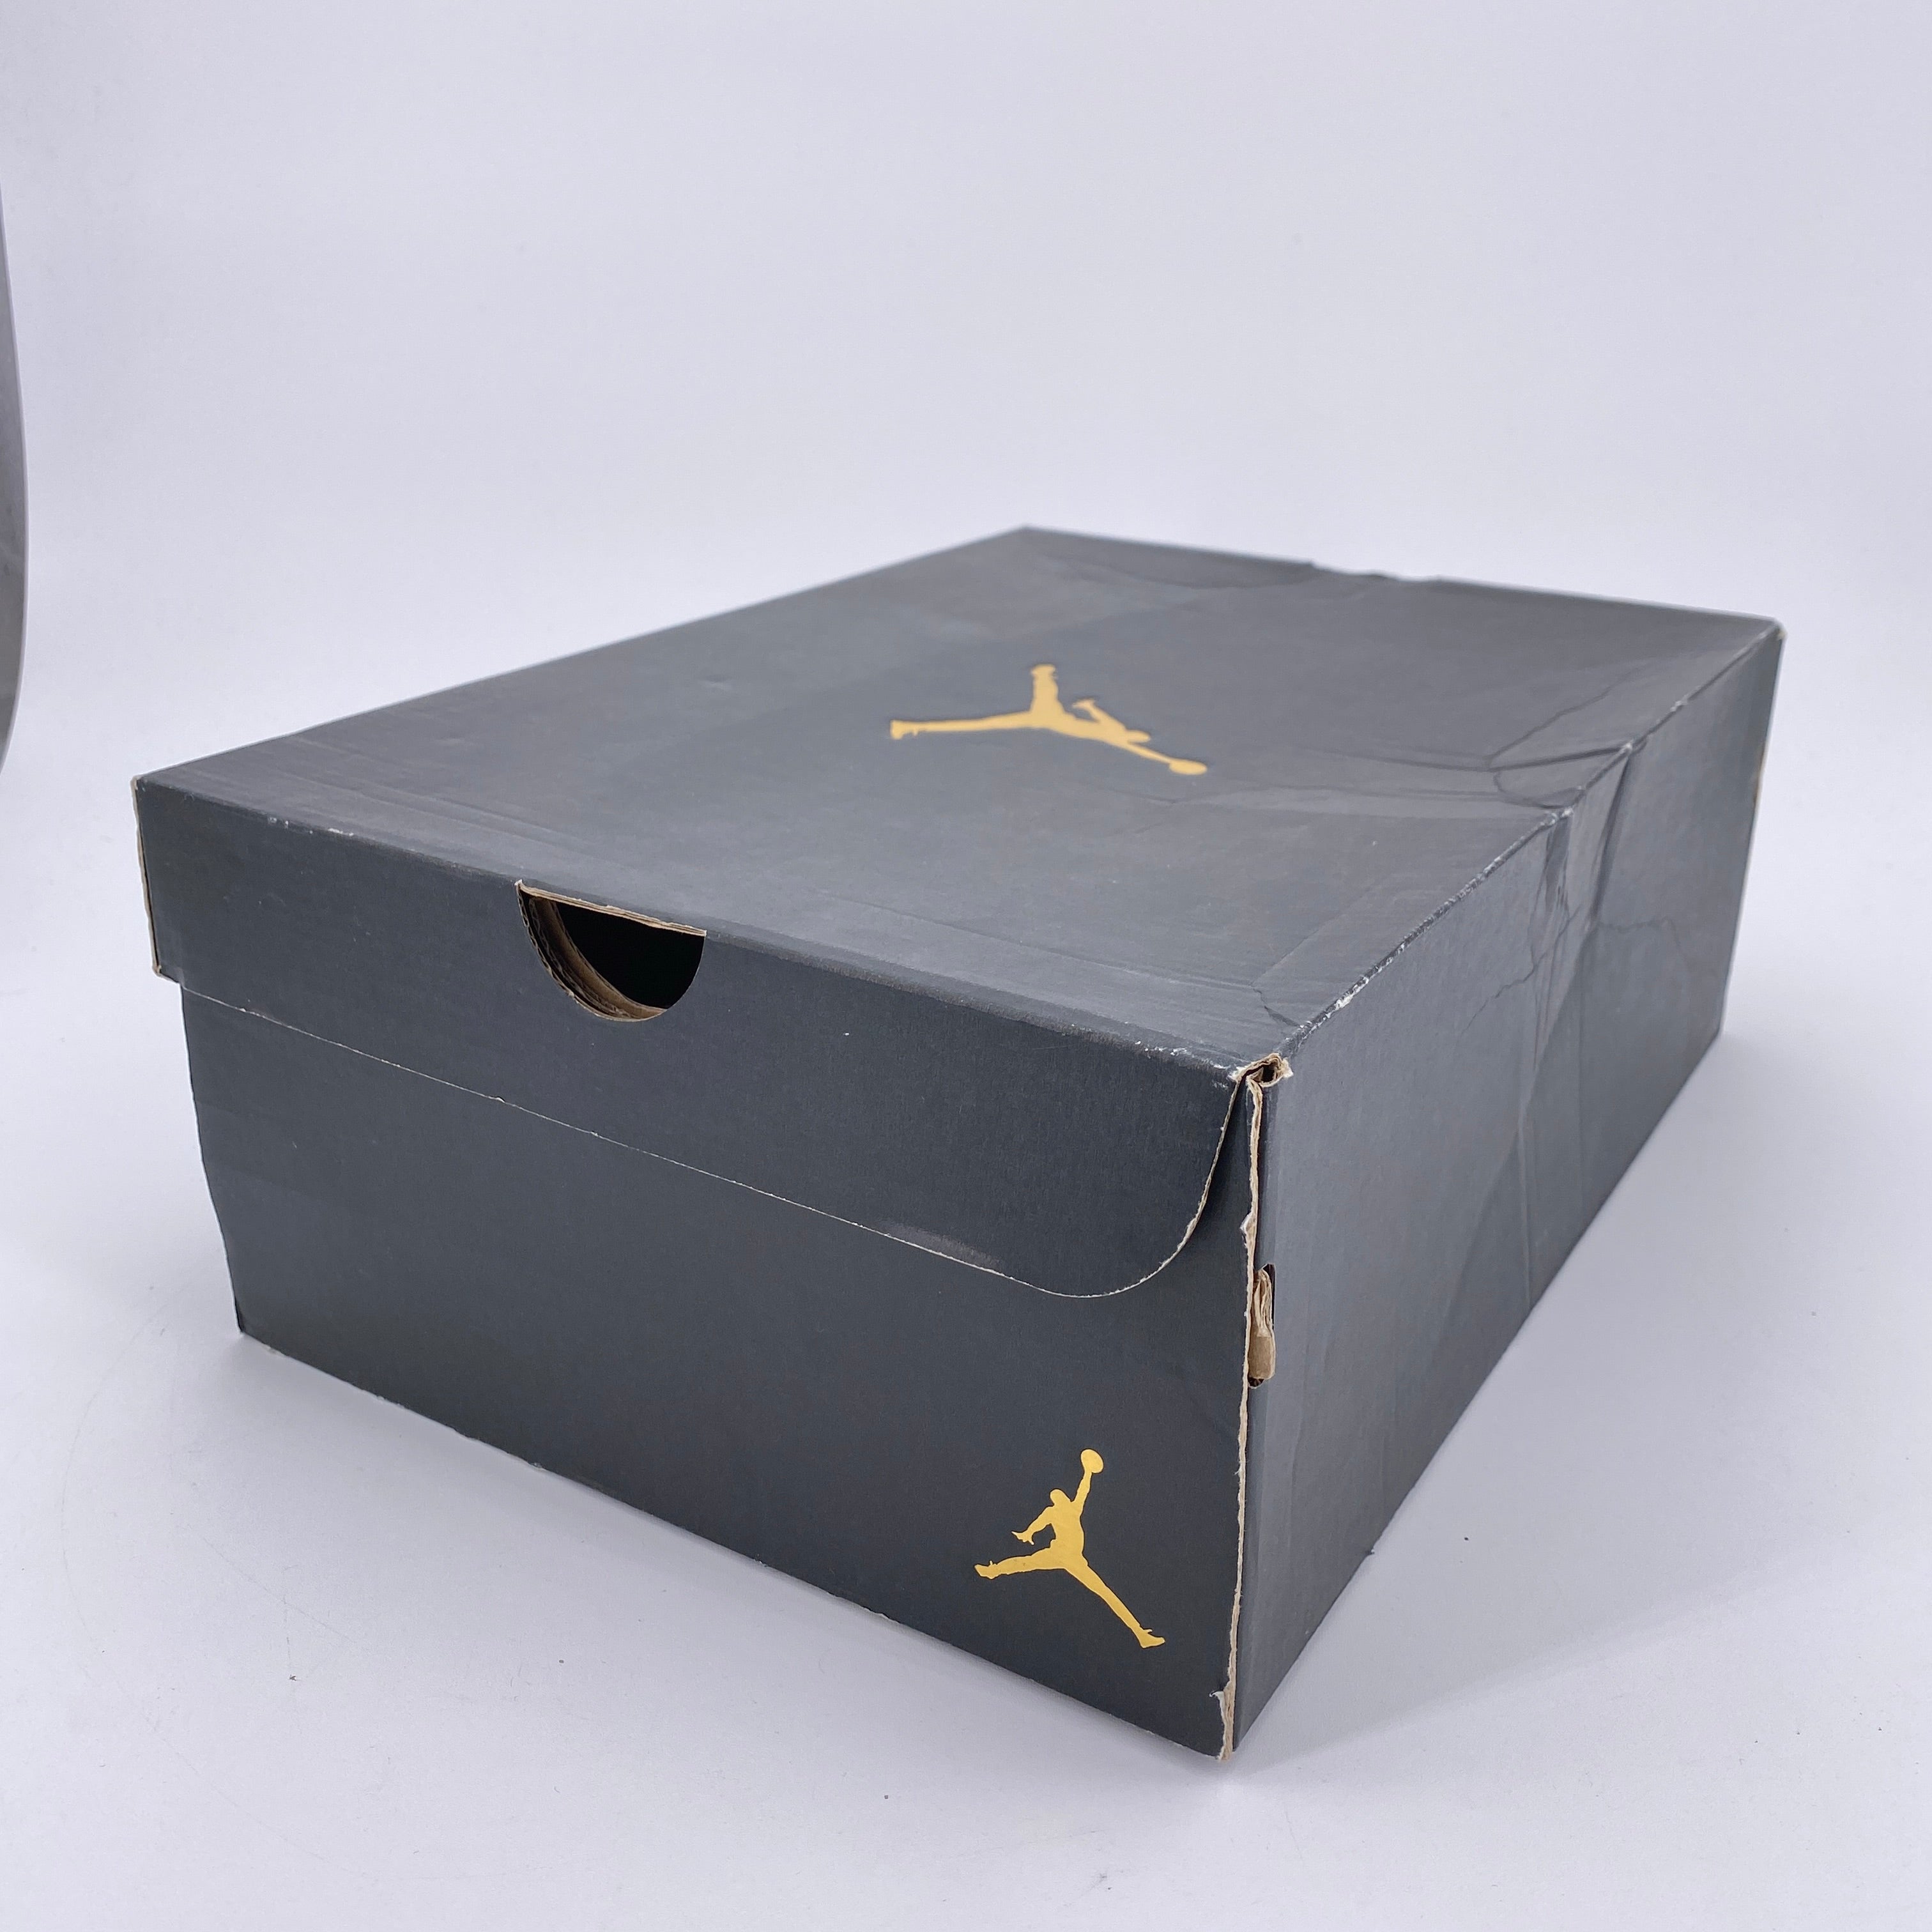 Air Jordan 11 Retro Low &quot;Closing Ceremony&quot; 2016 New Size 9.5